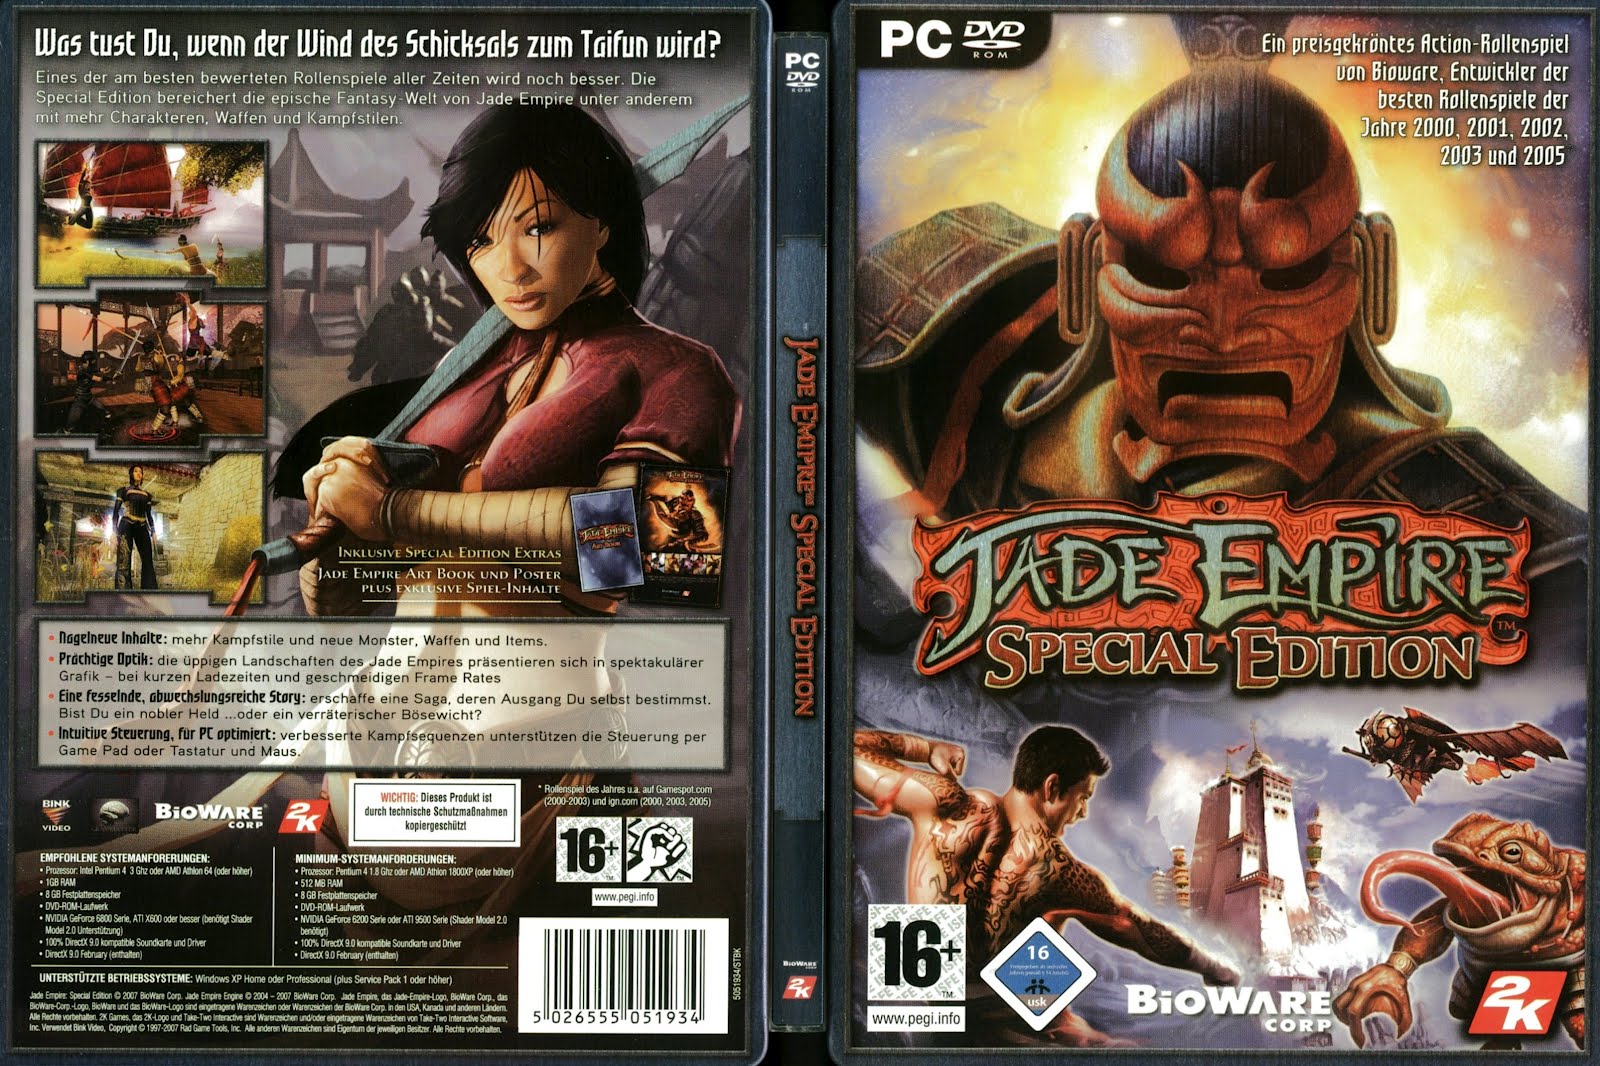 Filmovízia: Jade Empire